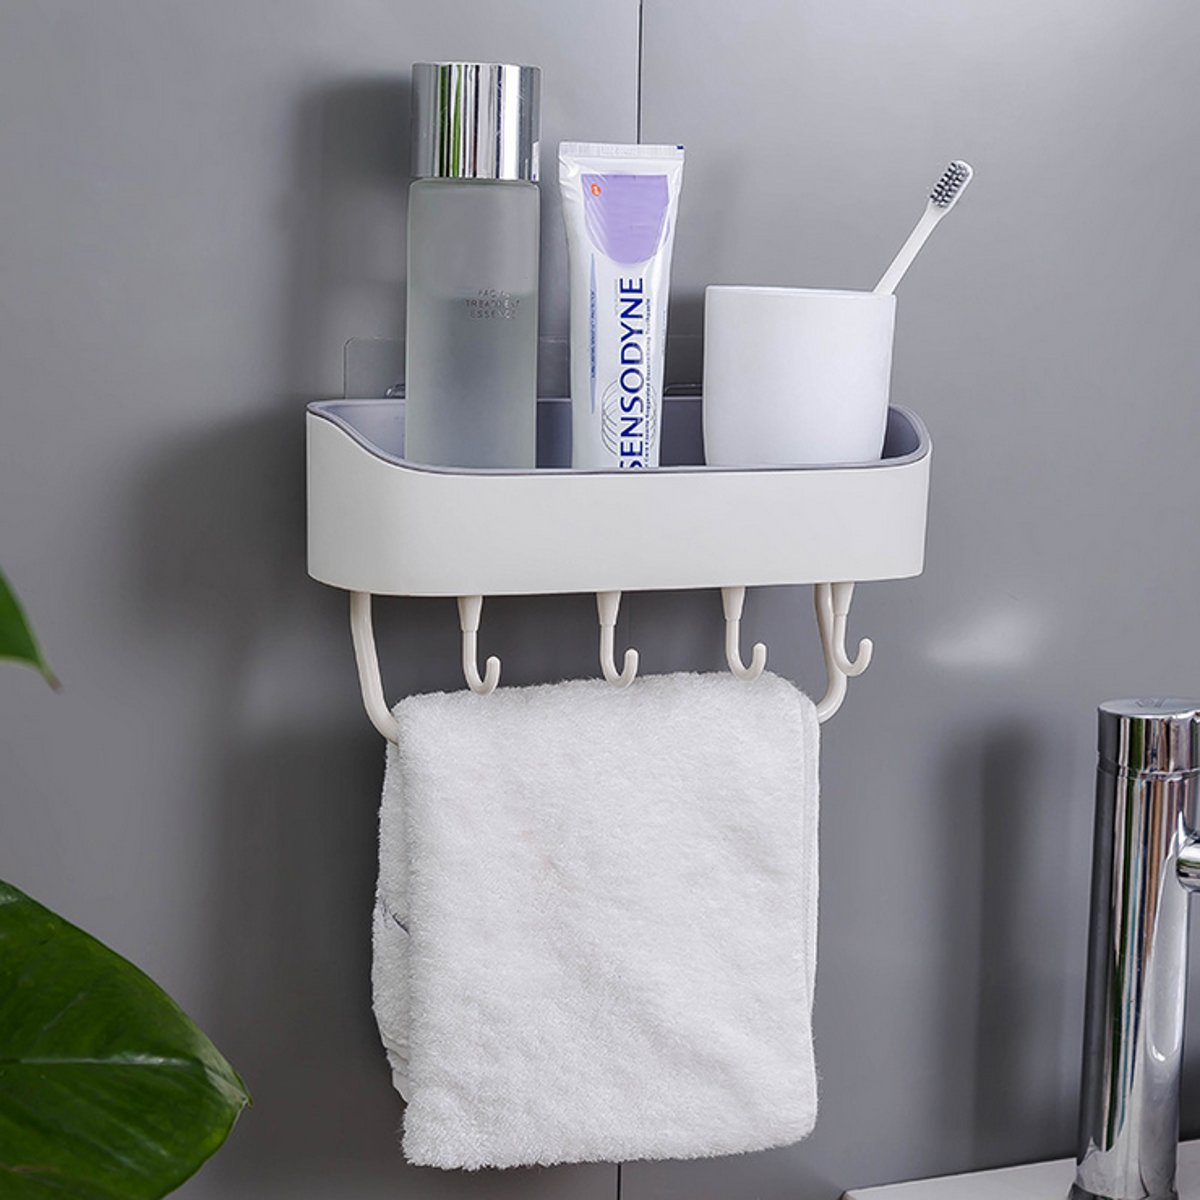 Self-adhesive-Wall-Hanging-Storage-Rack-Shelf-Hook-Home-Kitchen-Holder-Organizer-Towel-Holder-1552900-7